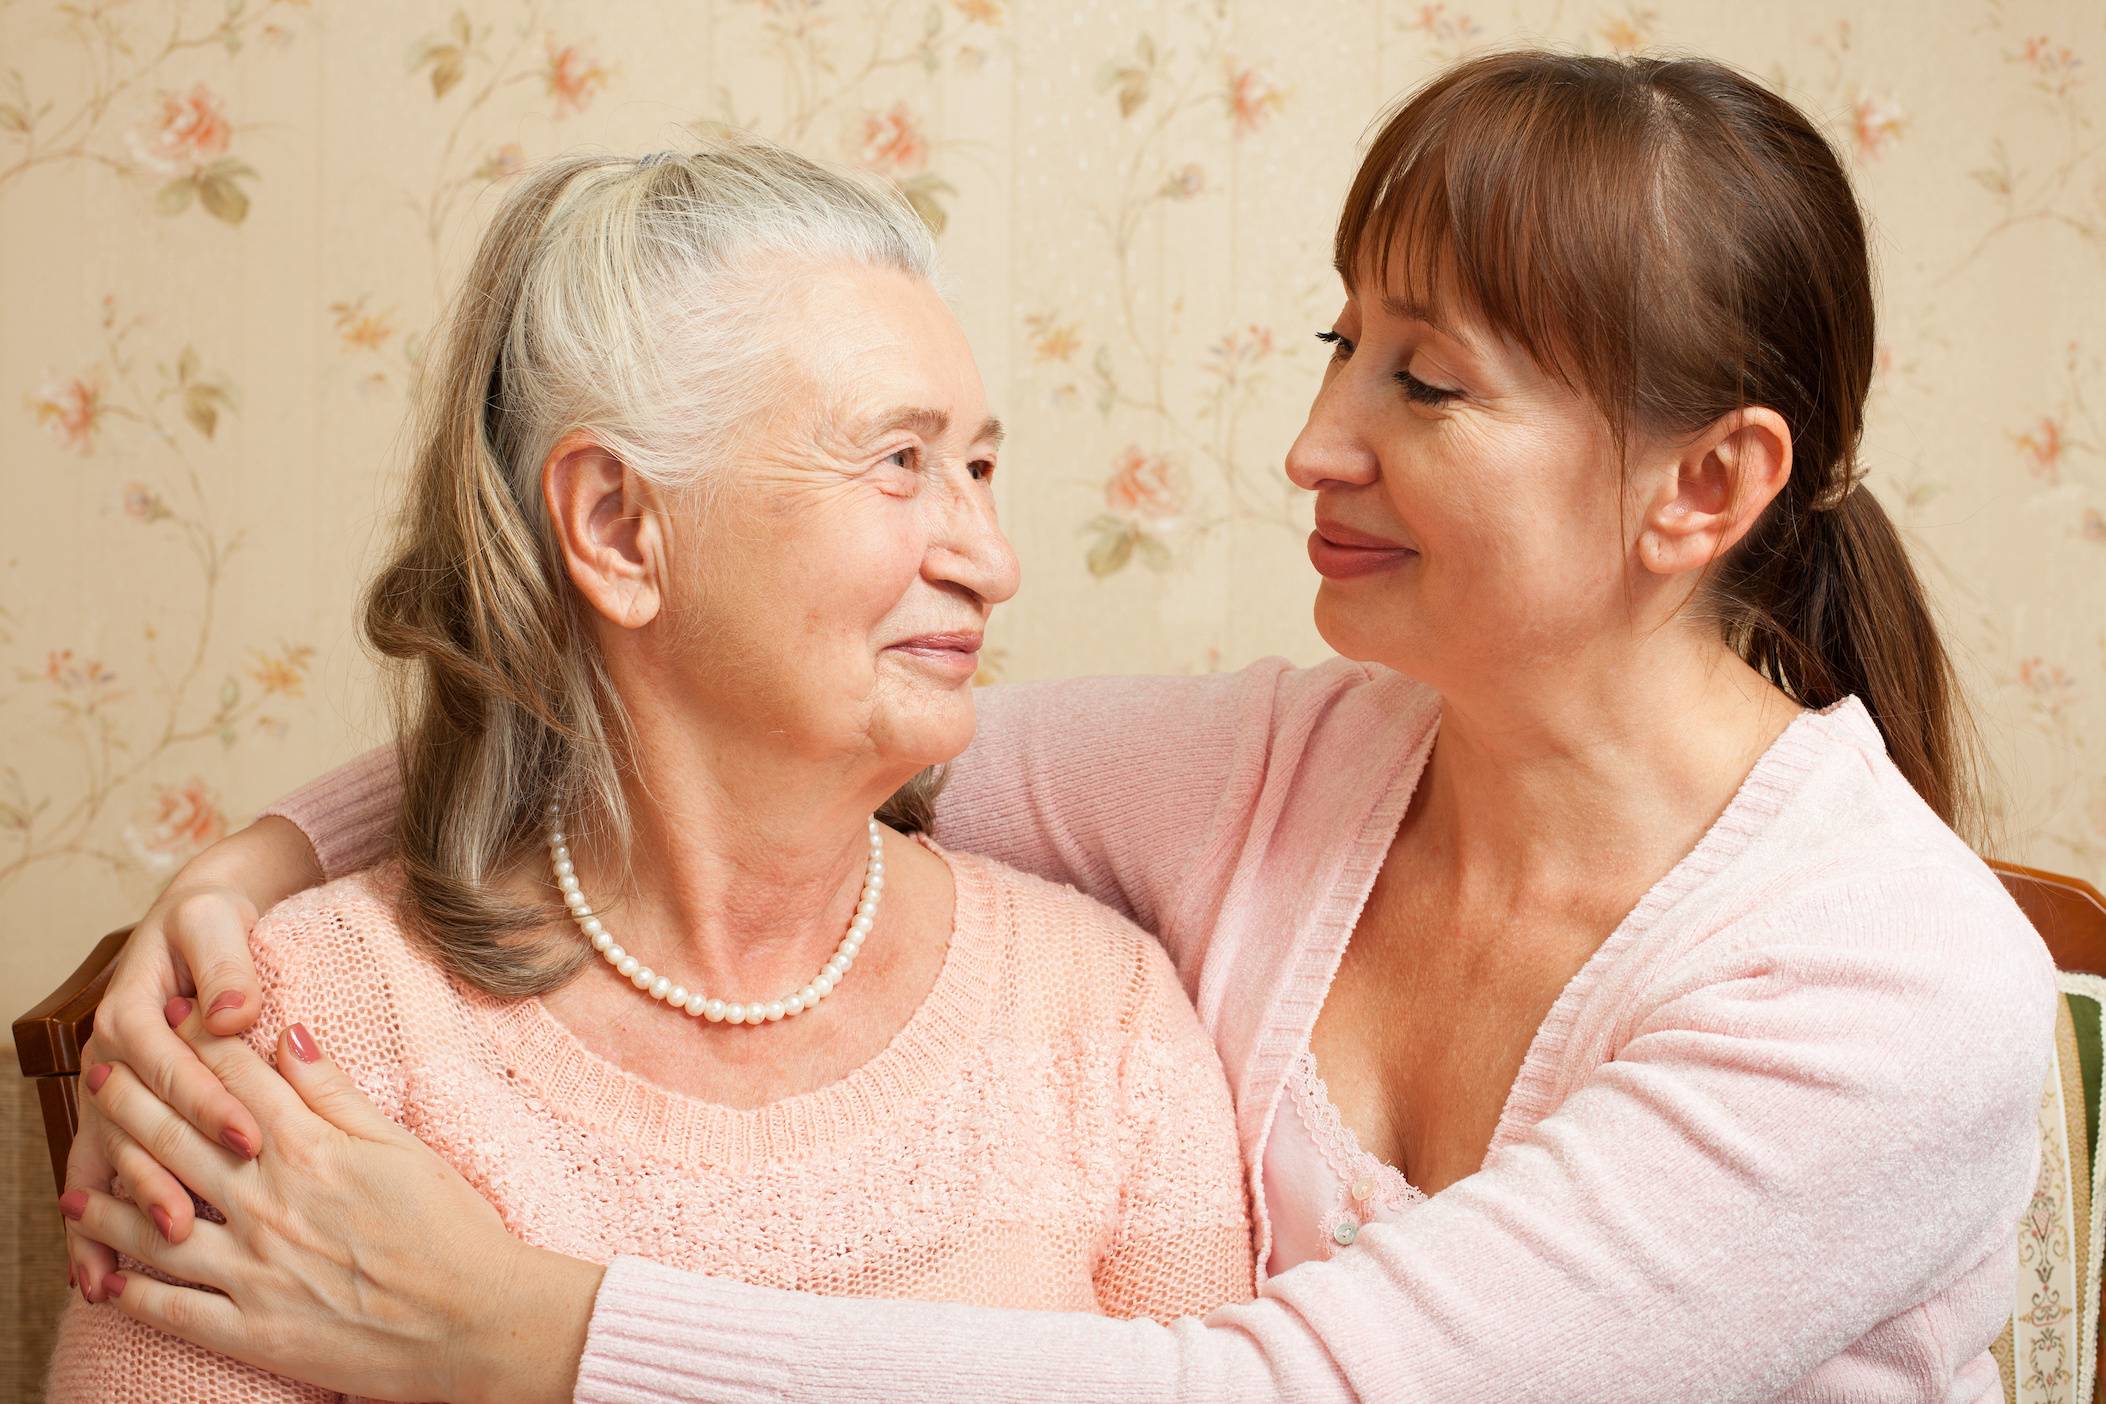 Elderly care worker embracing an elderly patient